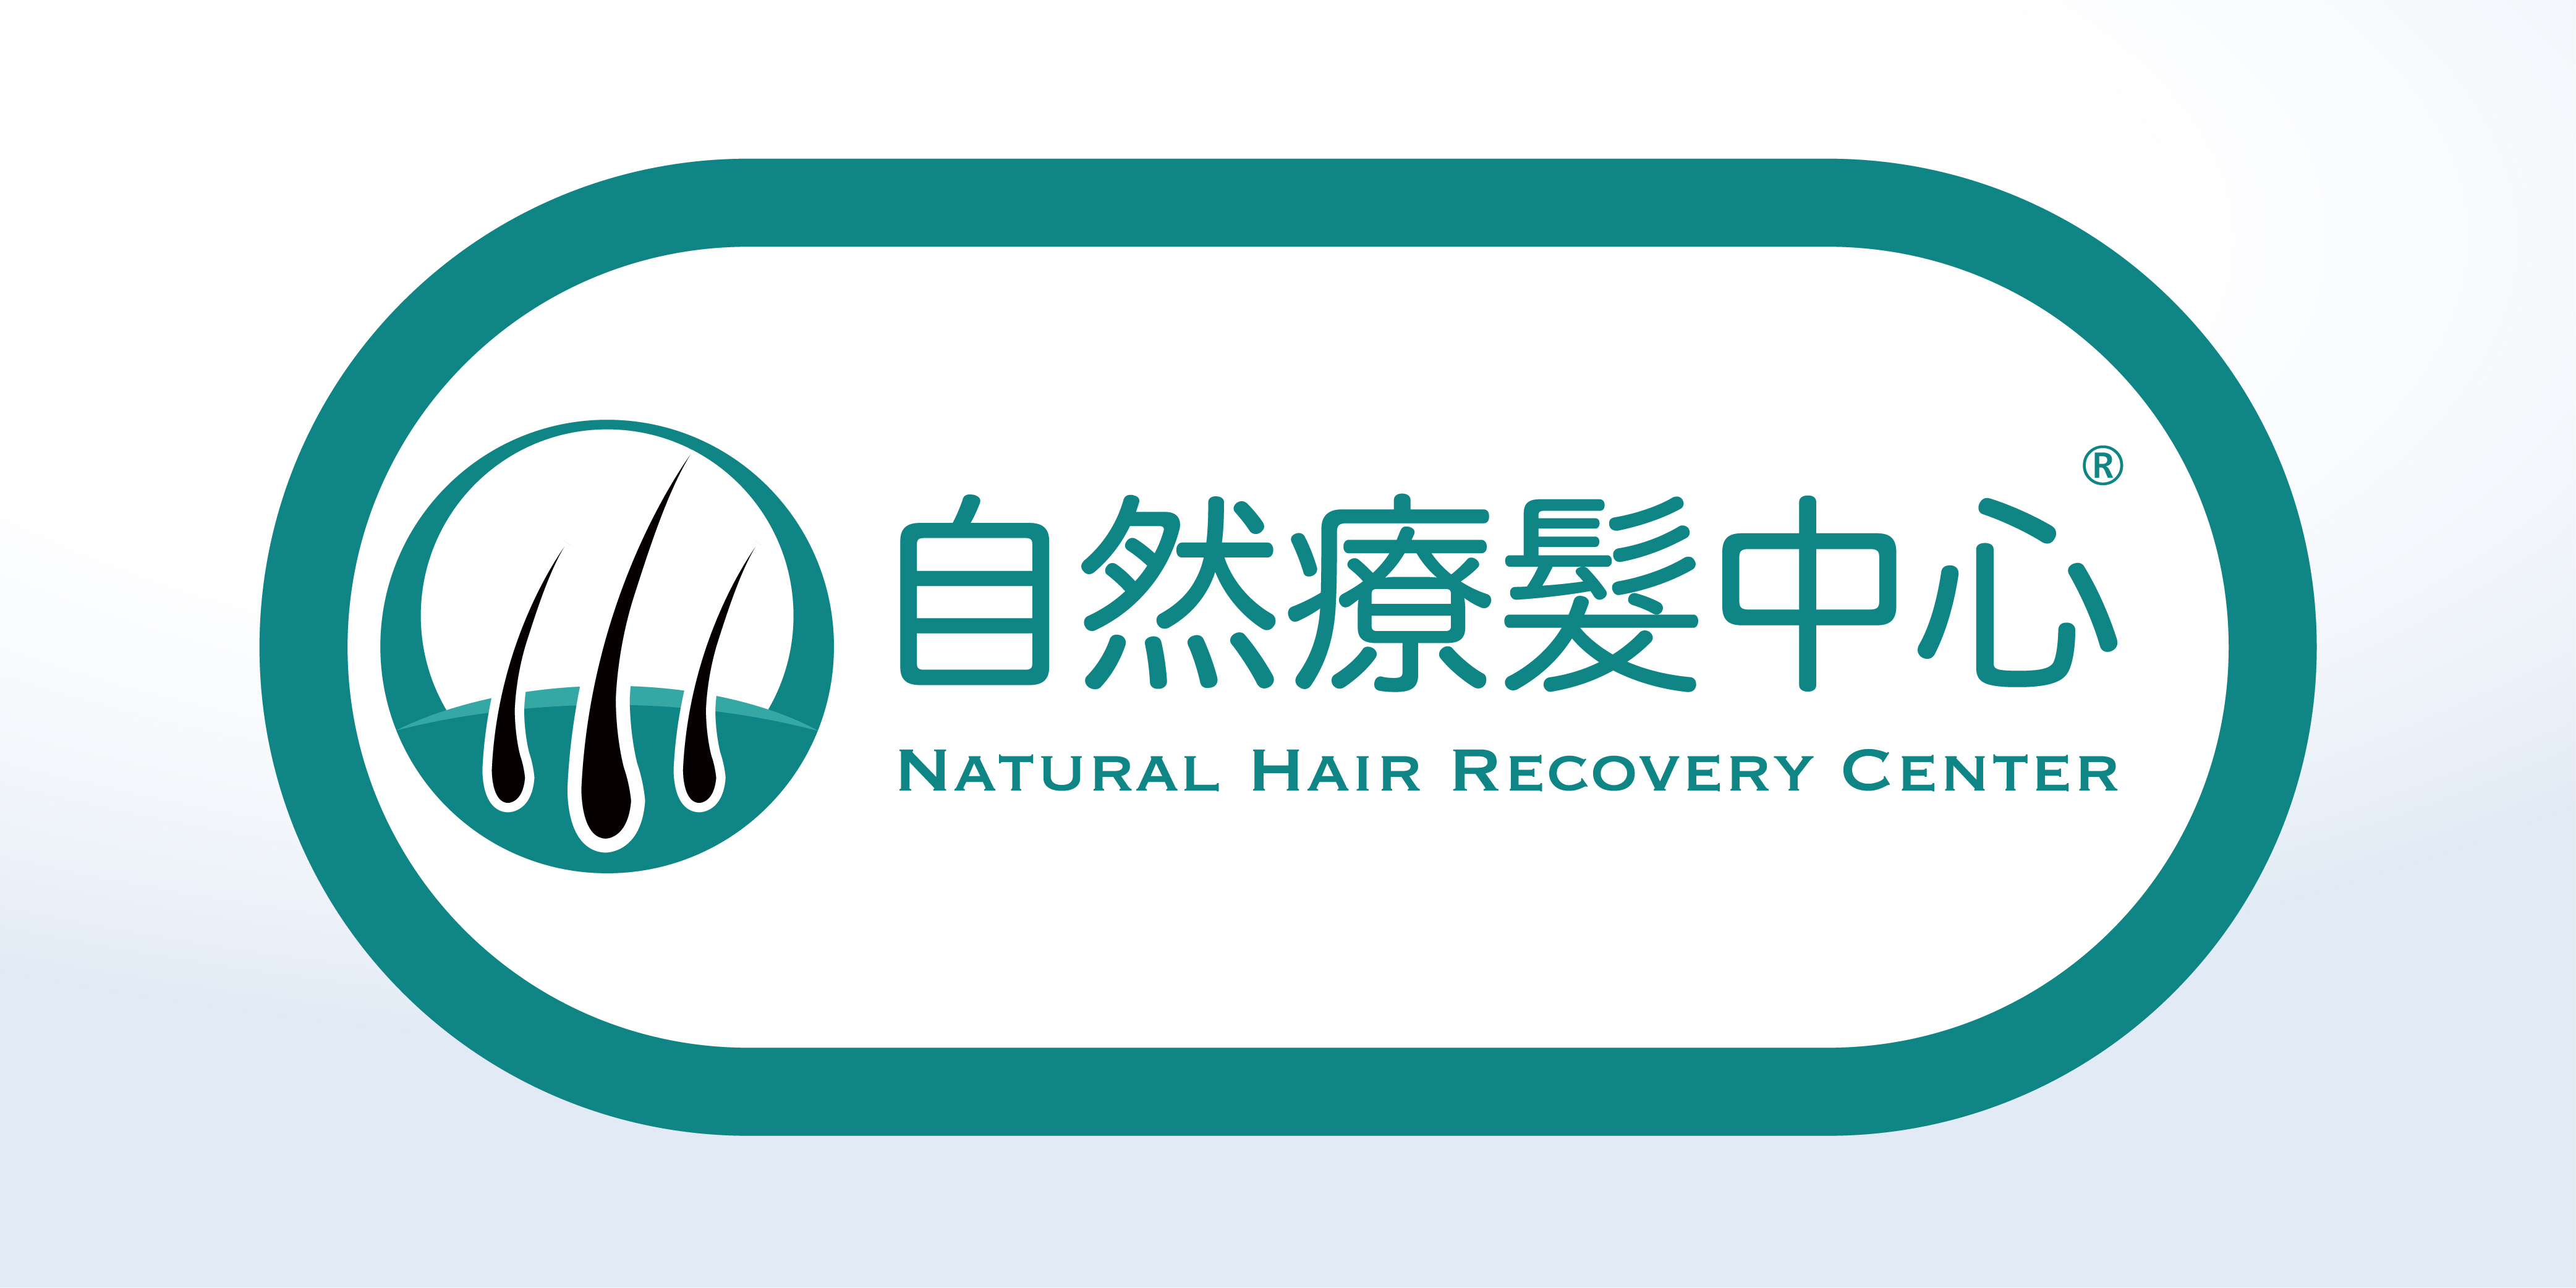 染髮: 自然療髮中心 Natural Hair Recovery Center ®